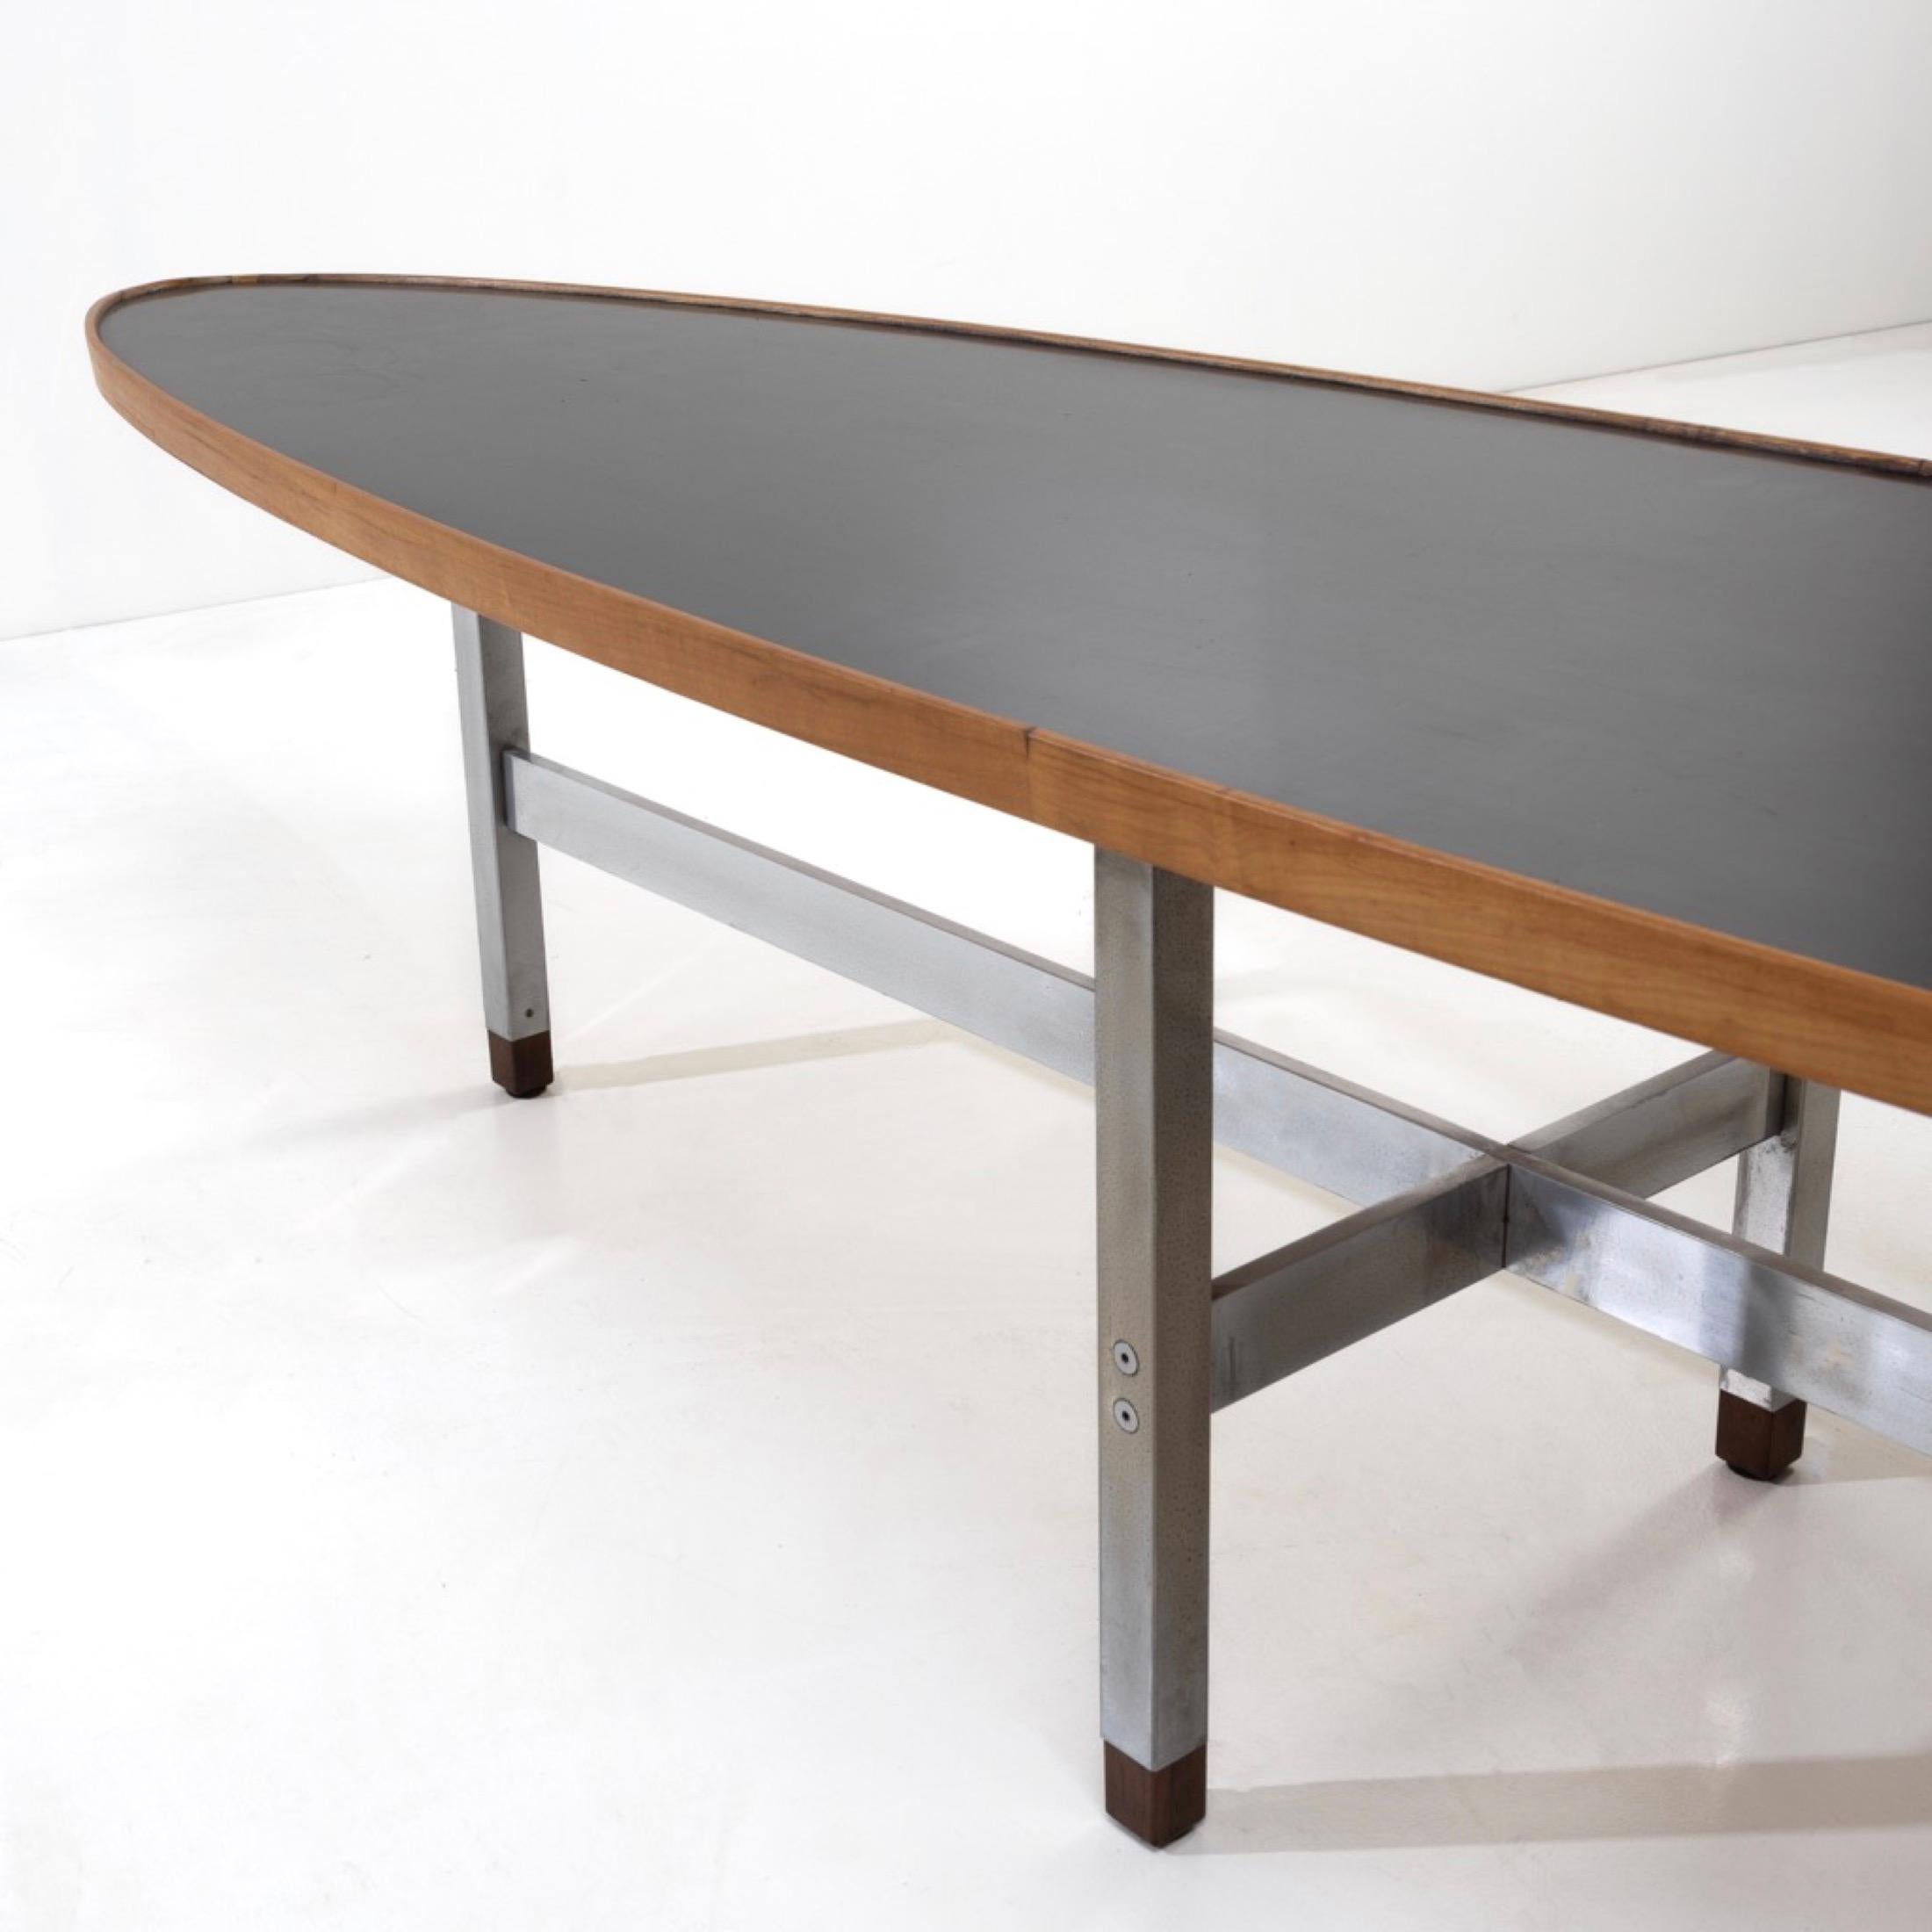 Elliptical coffee table by Edward Wormley for Dunbar For Sale 1